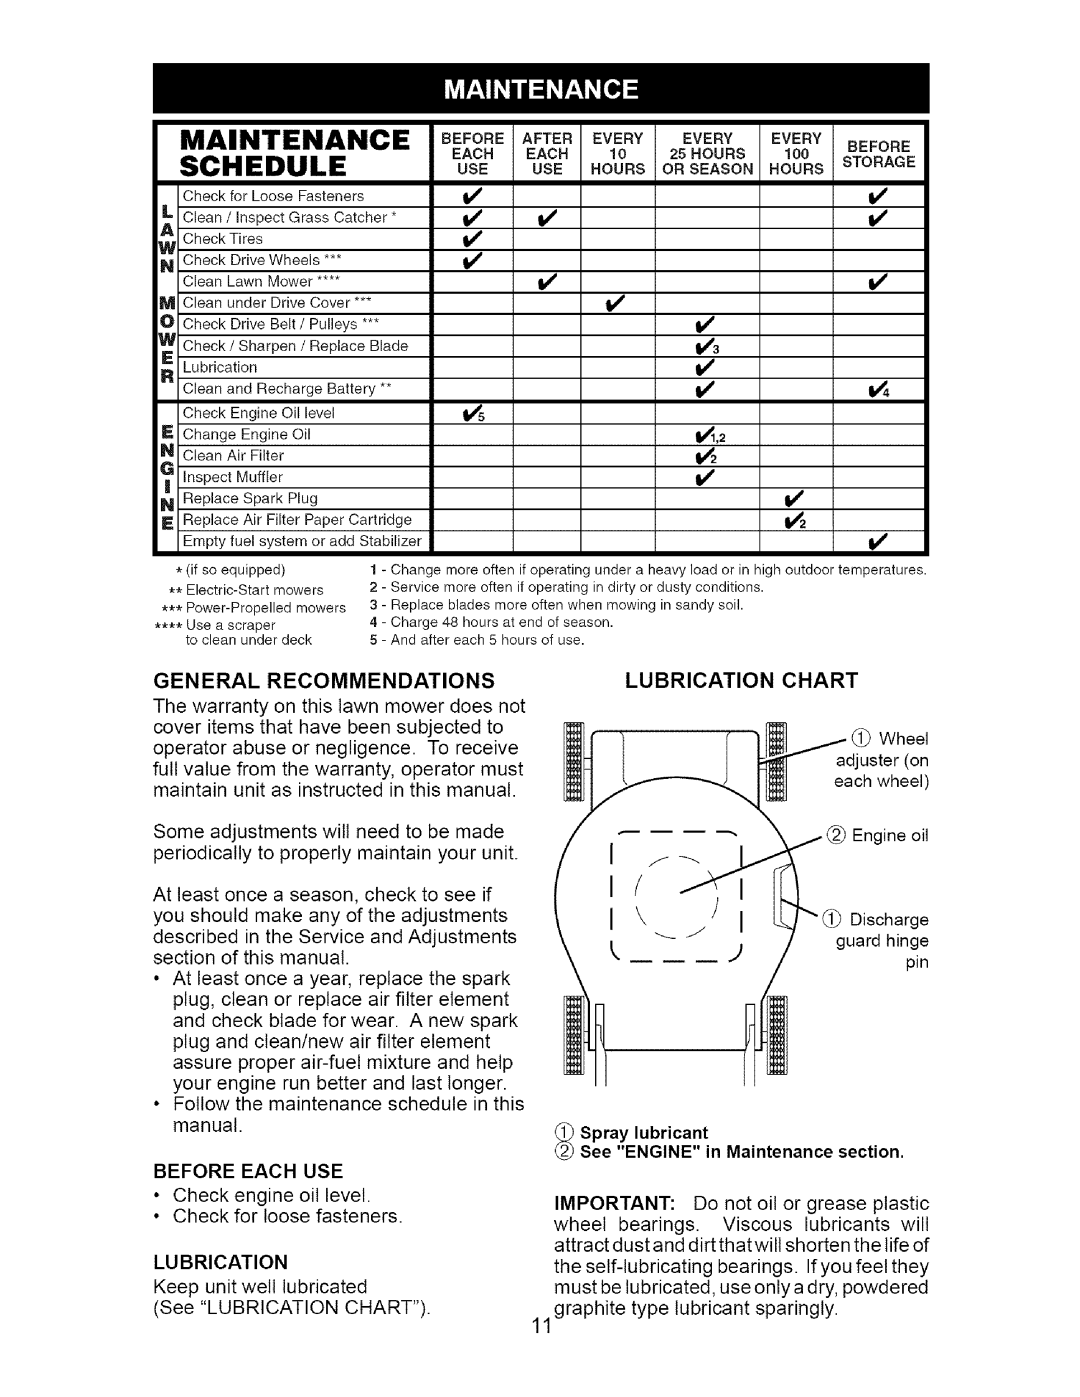 Craftsman 917.38514 Schedule, vv v v3 vl, General Recommendations, _ Spray lubricant, See ENGINE in Maintenance section 